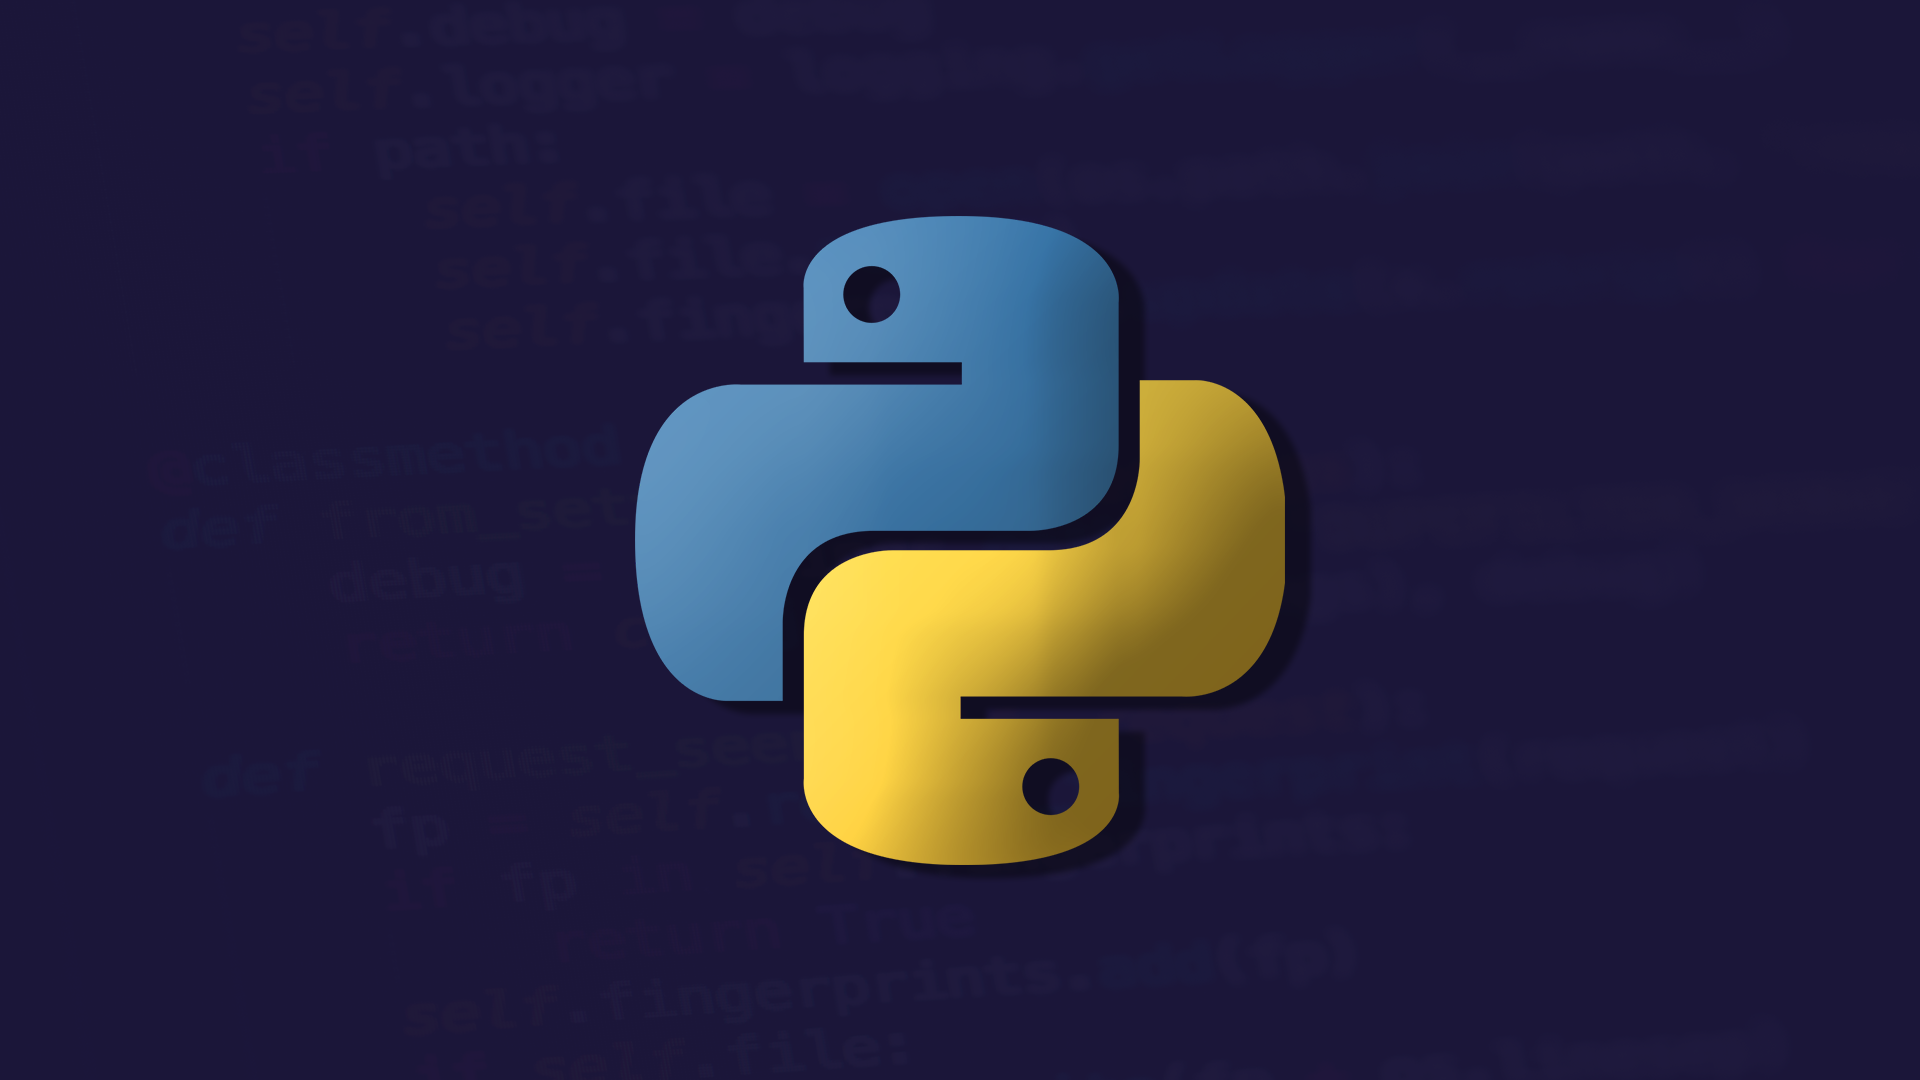 Python Programming Wallpapers - Wallpaper Cave